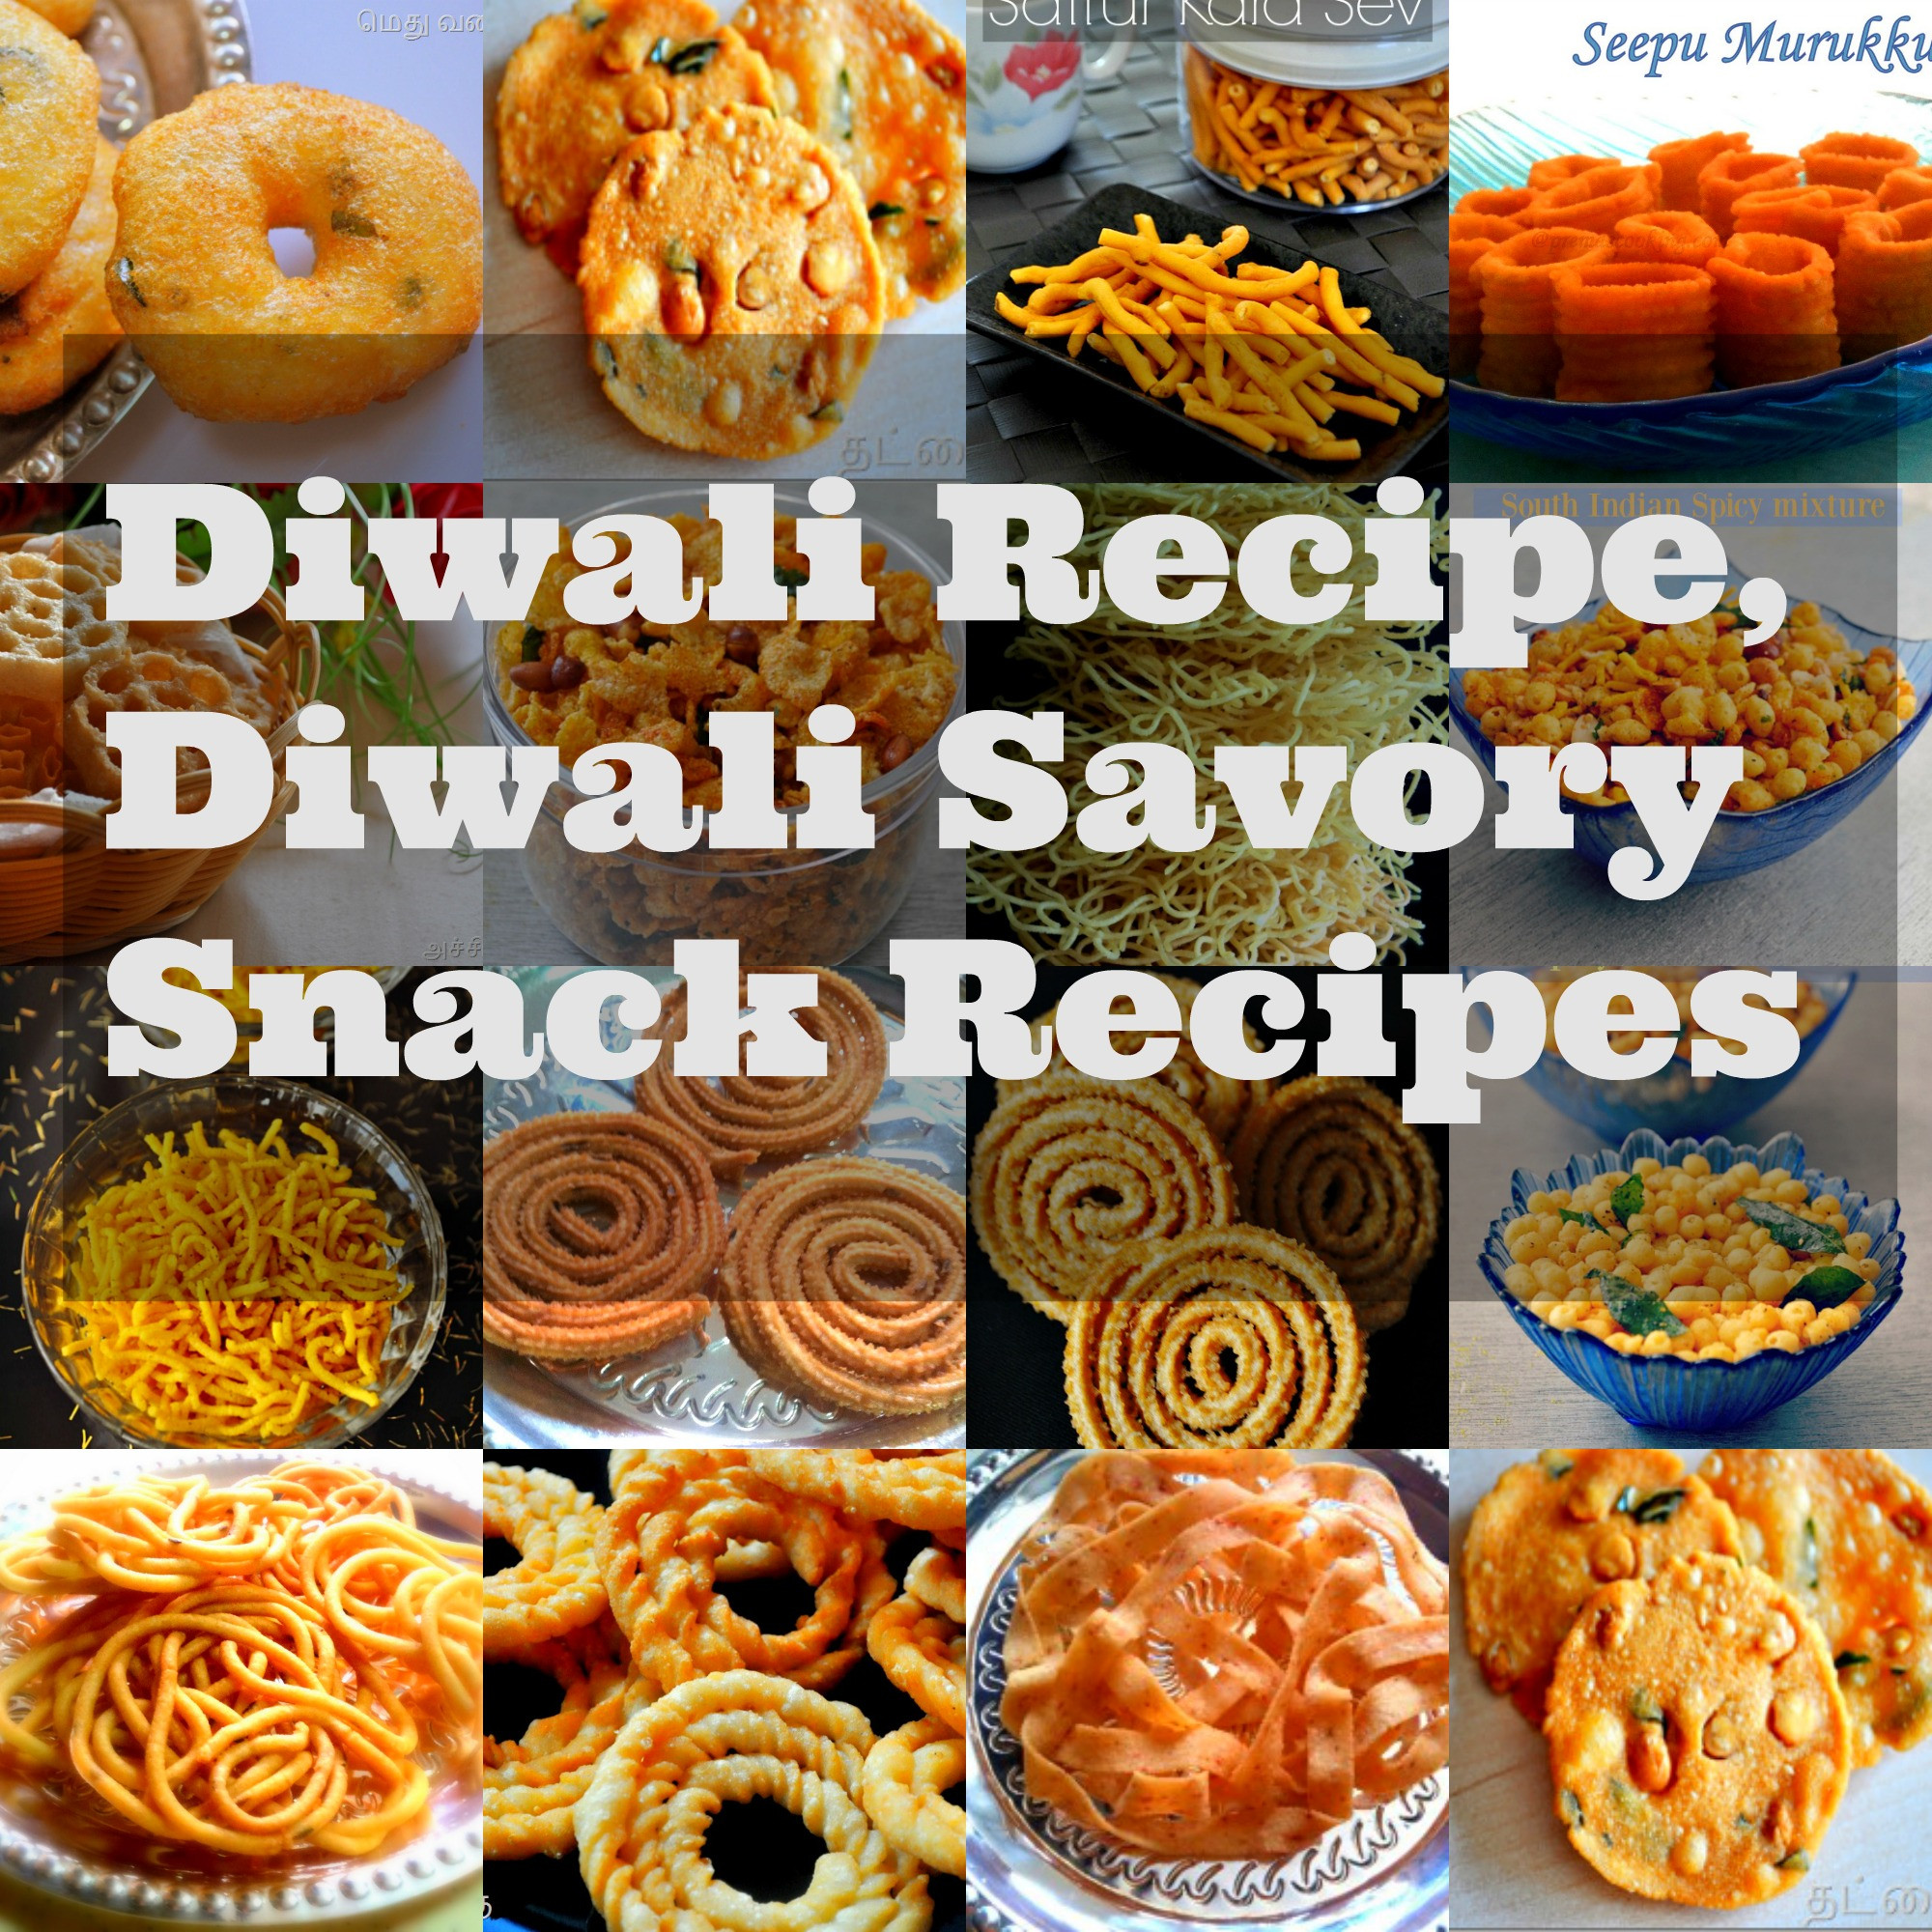 Diwali Snacks Recipe
 Best Diwali Recipes Diwali Savory Snacks Recipe list 2016